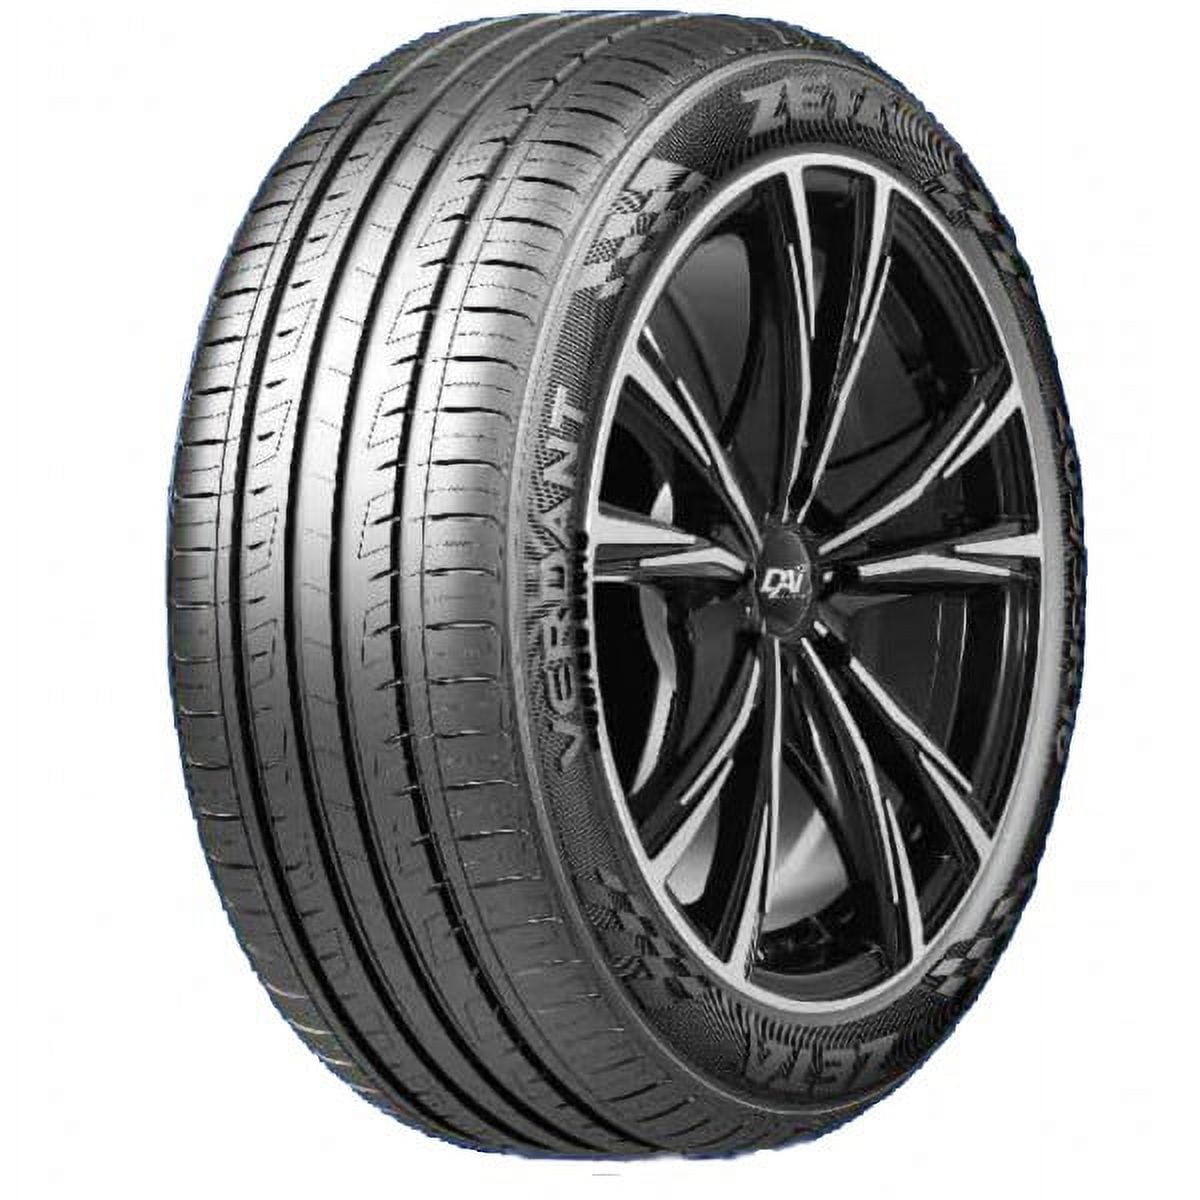 Tire 2013-14 H 185/65R15 2017 88 Fuel Goodyear EV Hyundai LE, Fit Max Accent Fits: Assurance Honda